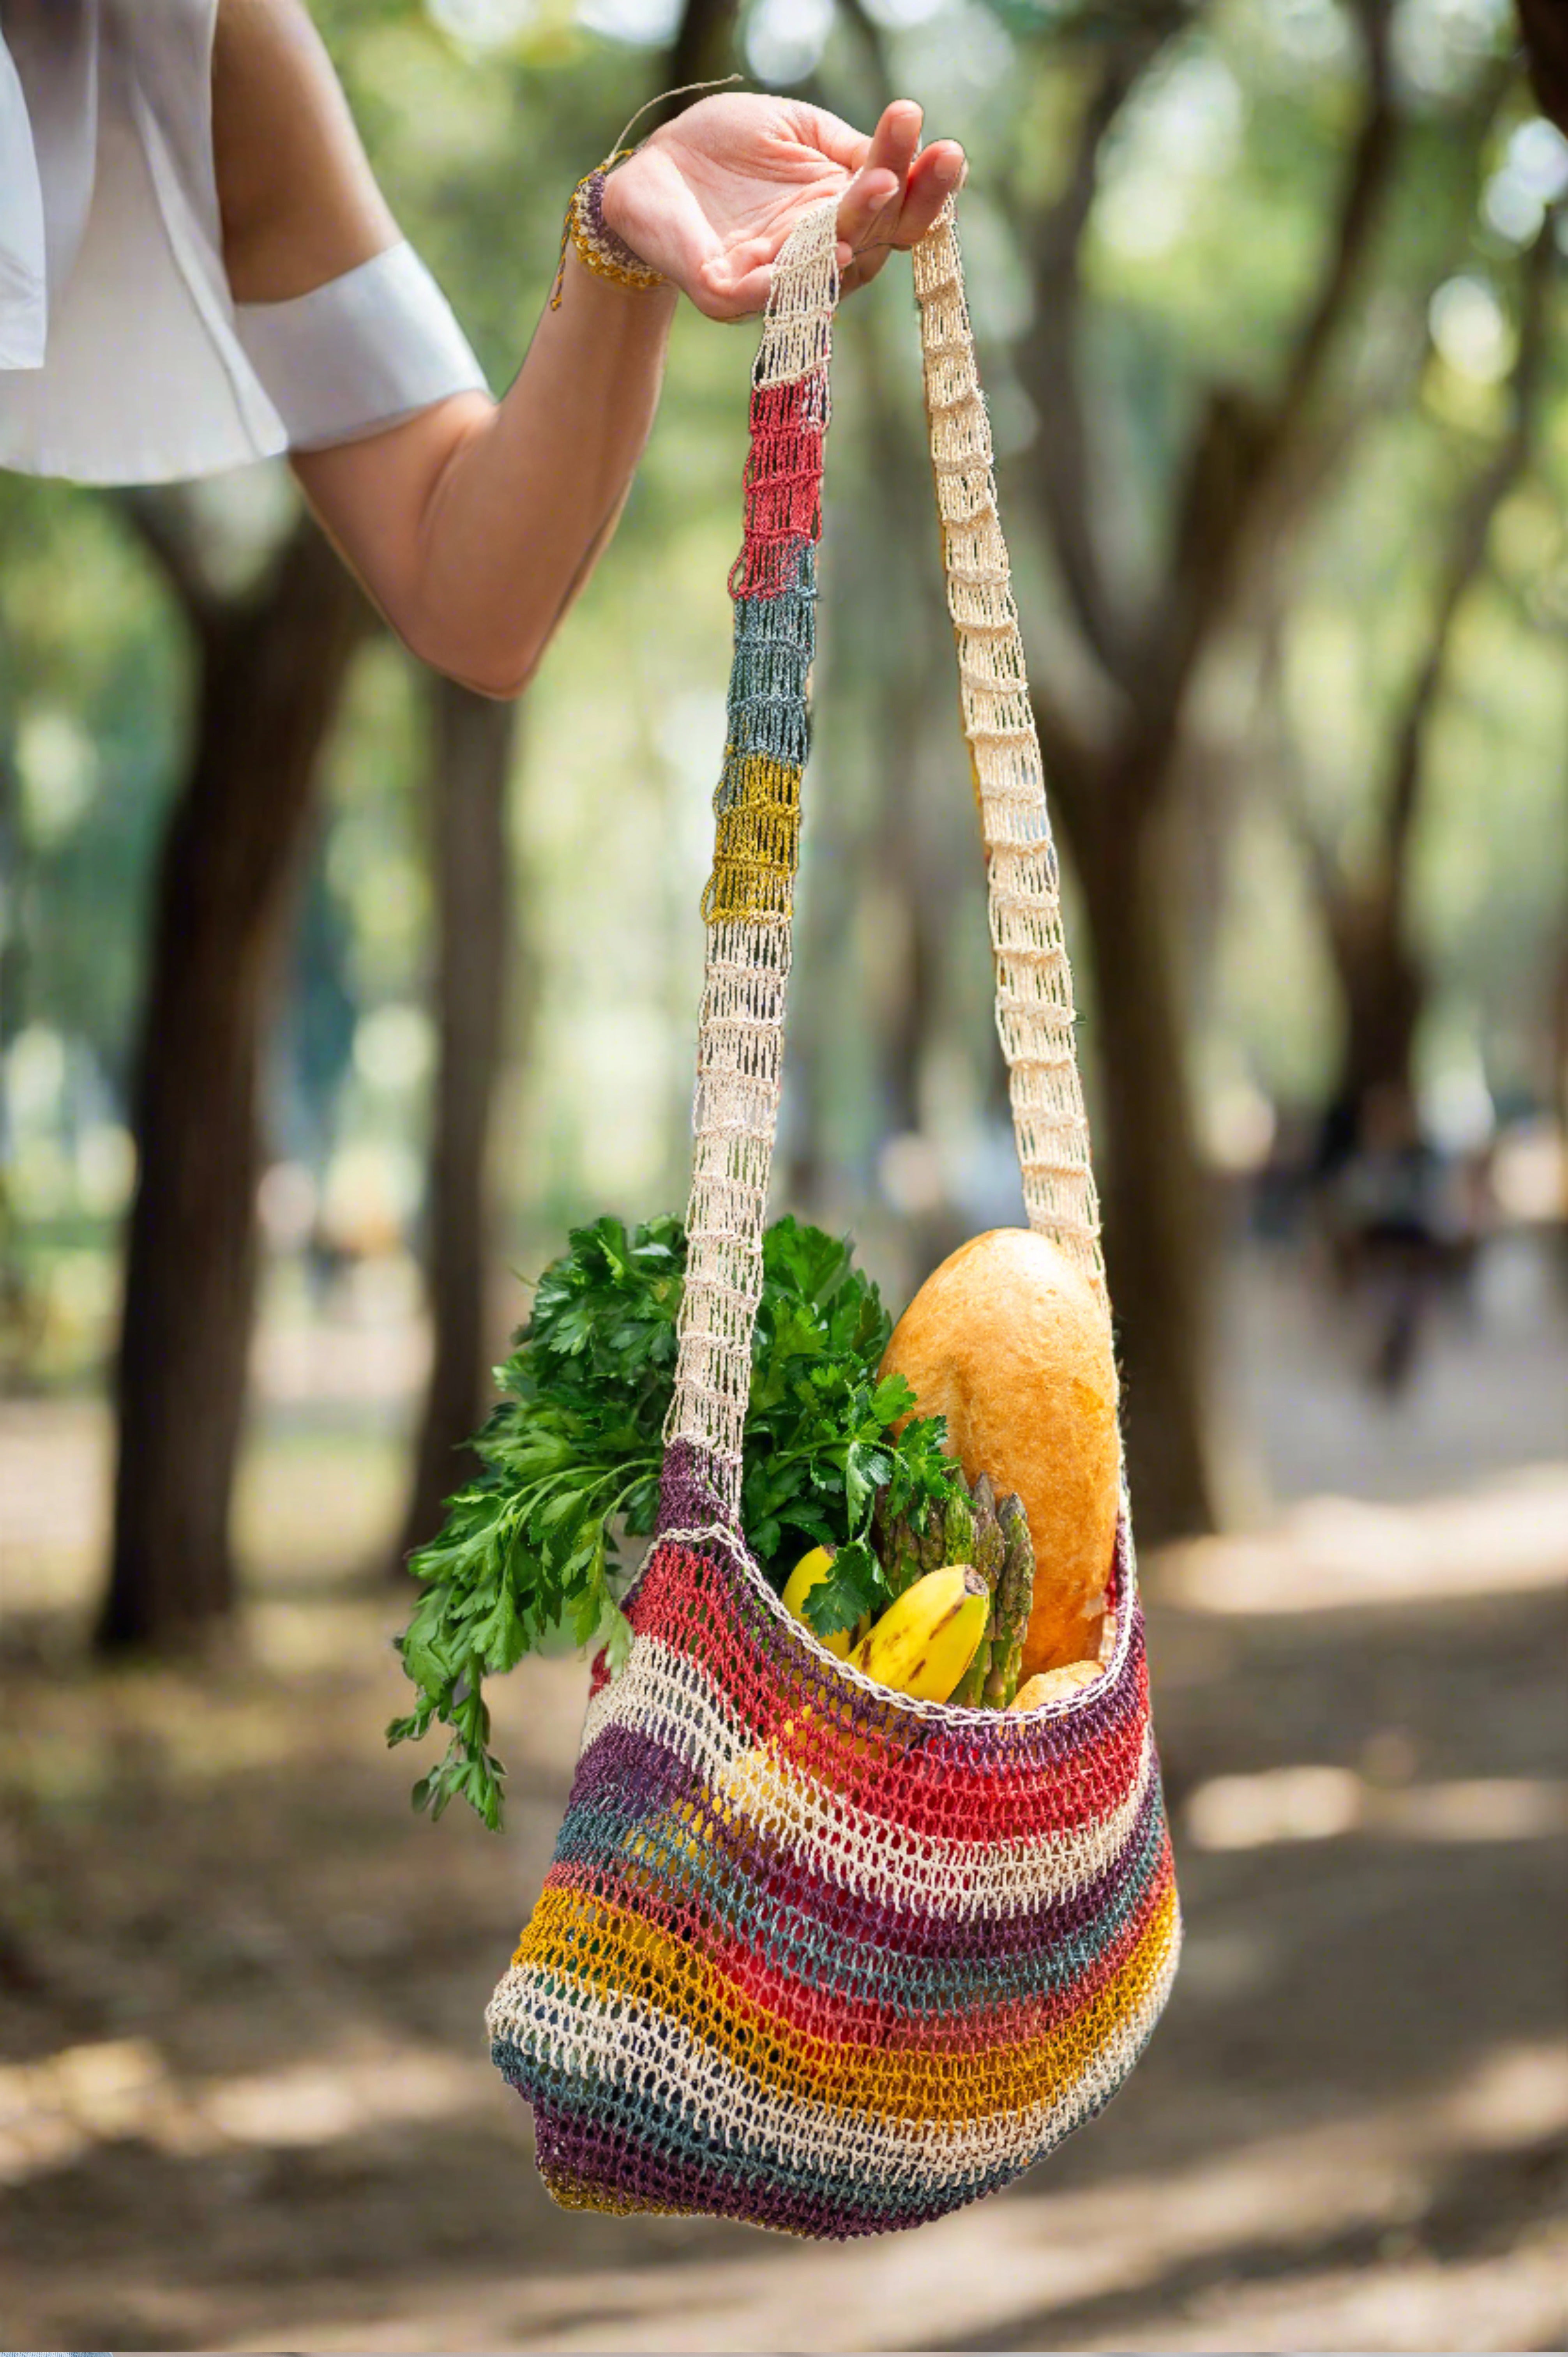 Chigra Amazon Jungle Essence handcrafted tote bag by Huaorani